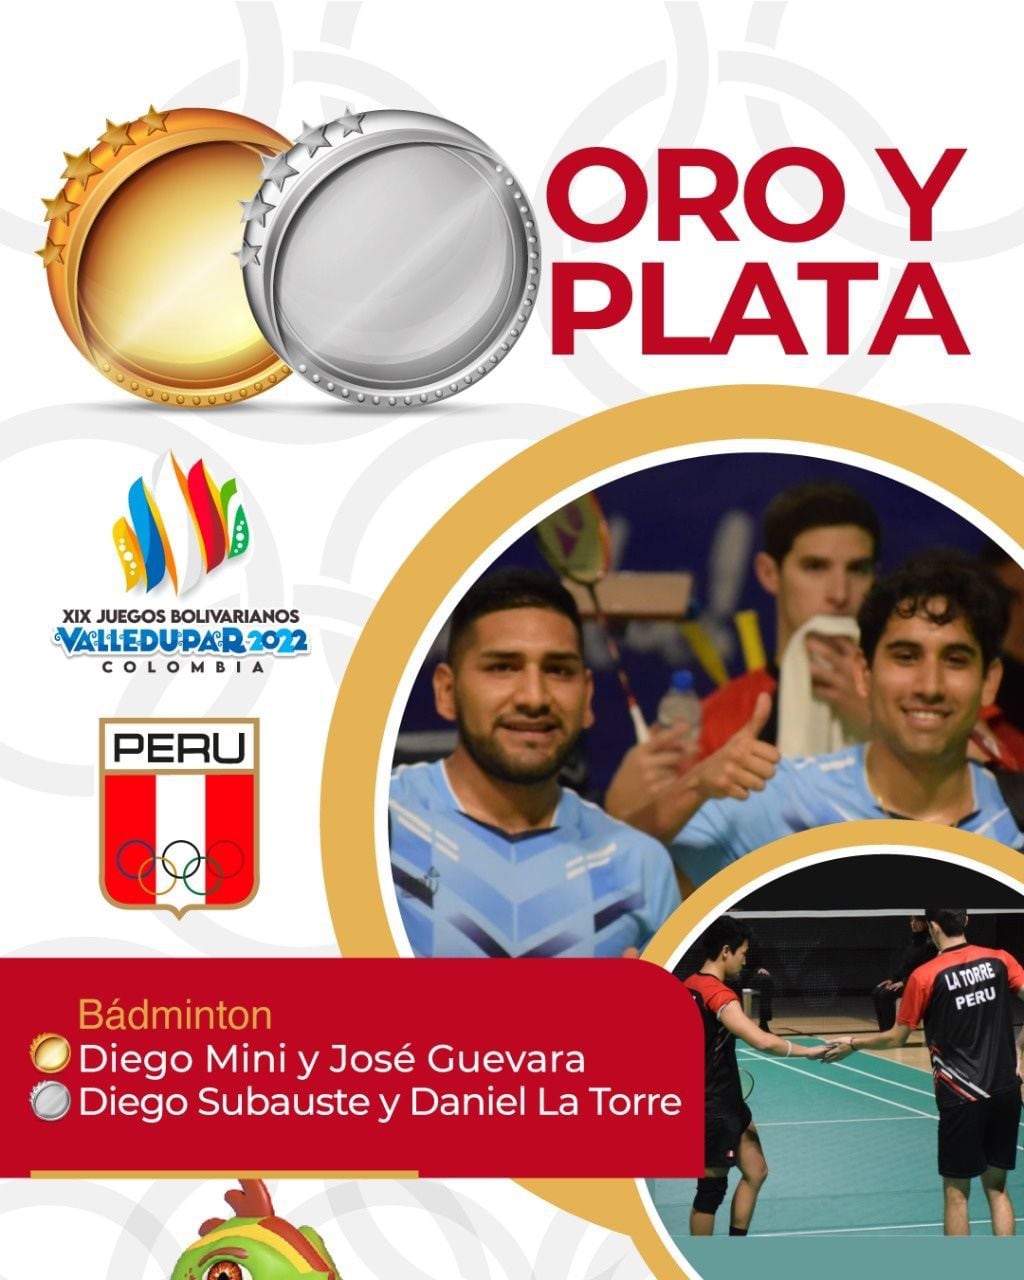 Diego Mini - José Guevara wins a gold medal in badminton.  (Photo: Peru Olympic Committee)